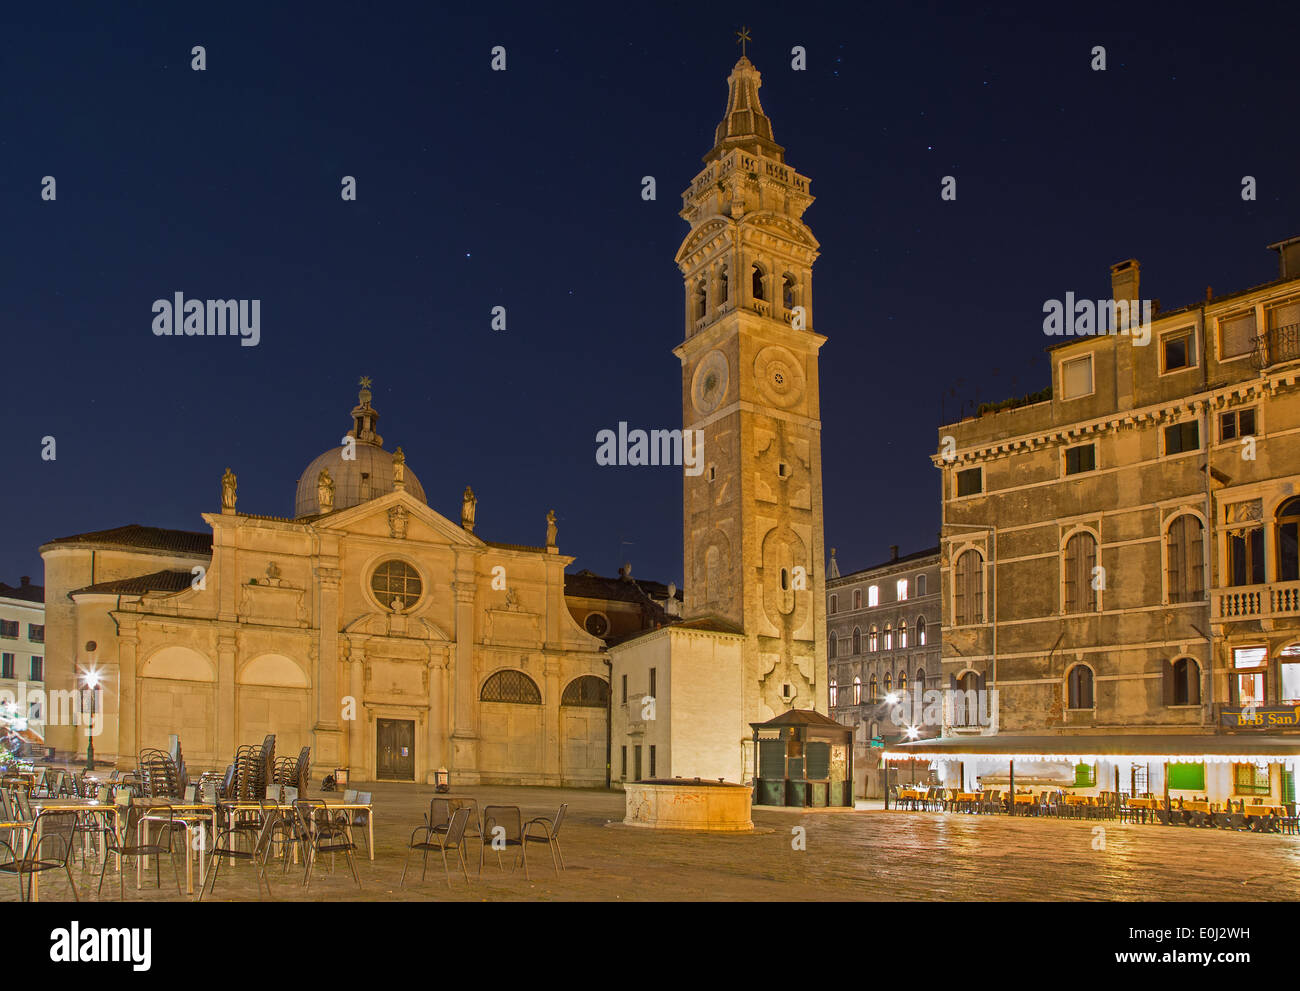 Venecia, Italia - 13 de marzo de 2014:Chiesa di Santa Maria Formosa, iglesia y plaza de noche Foto de stock